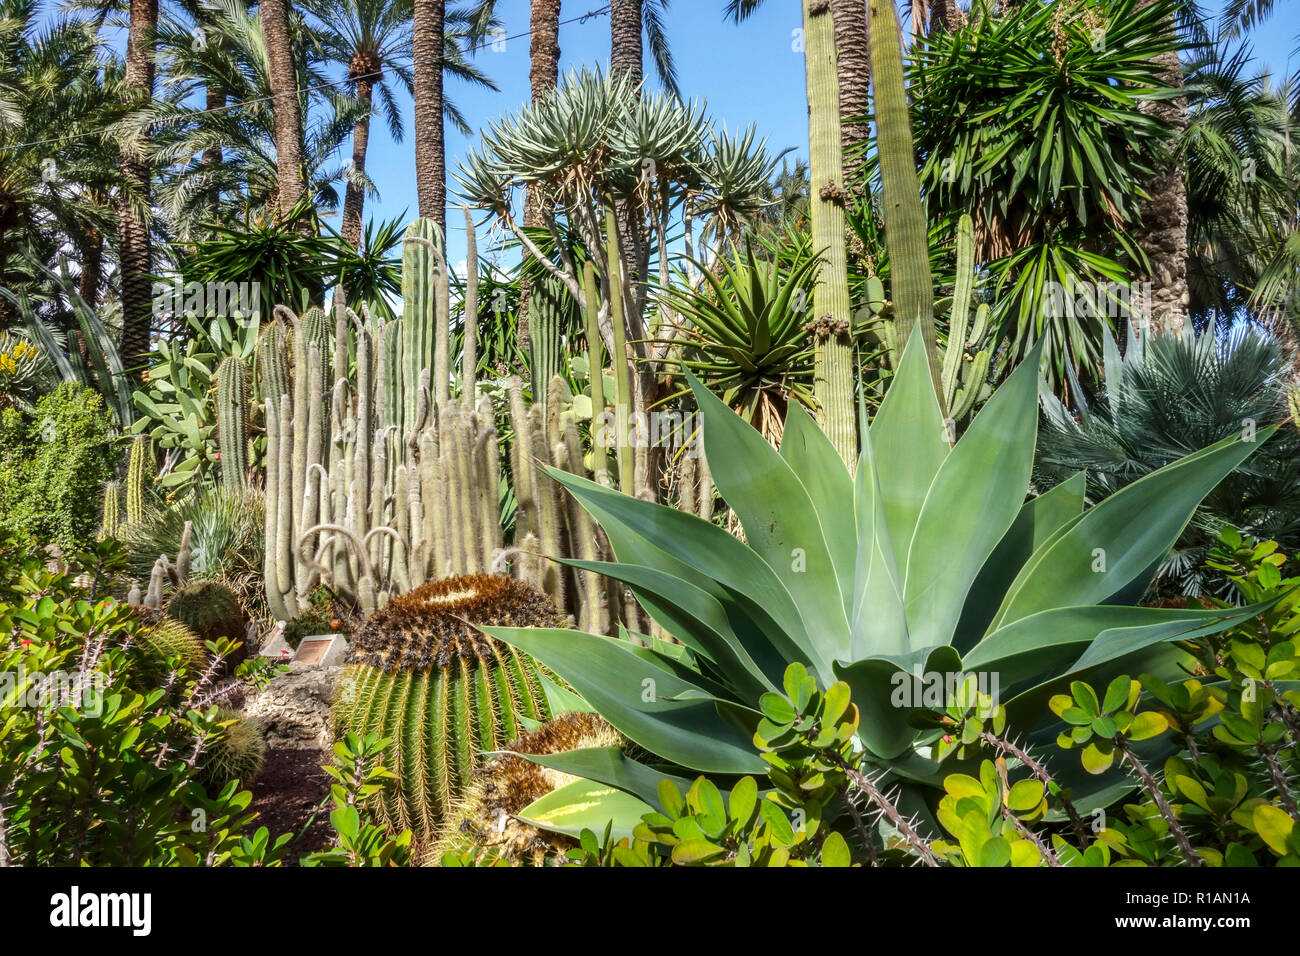 Spanien, Elche, Botanischer Garten, Huerto del Cura, Palme Provinz Alicante, Valencia region Stockfoto